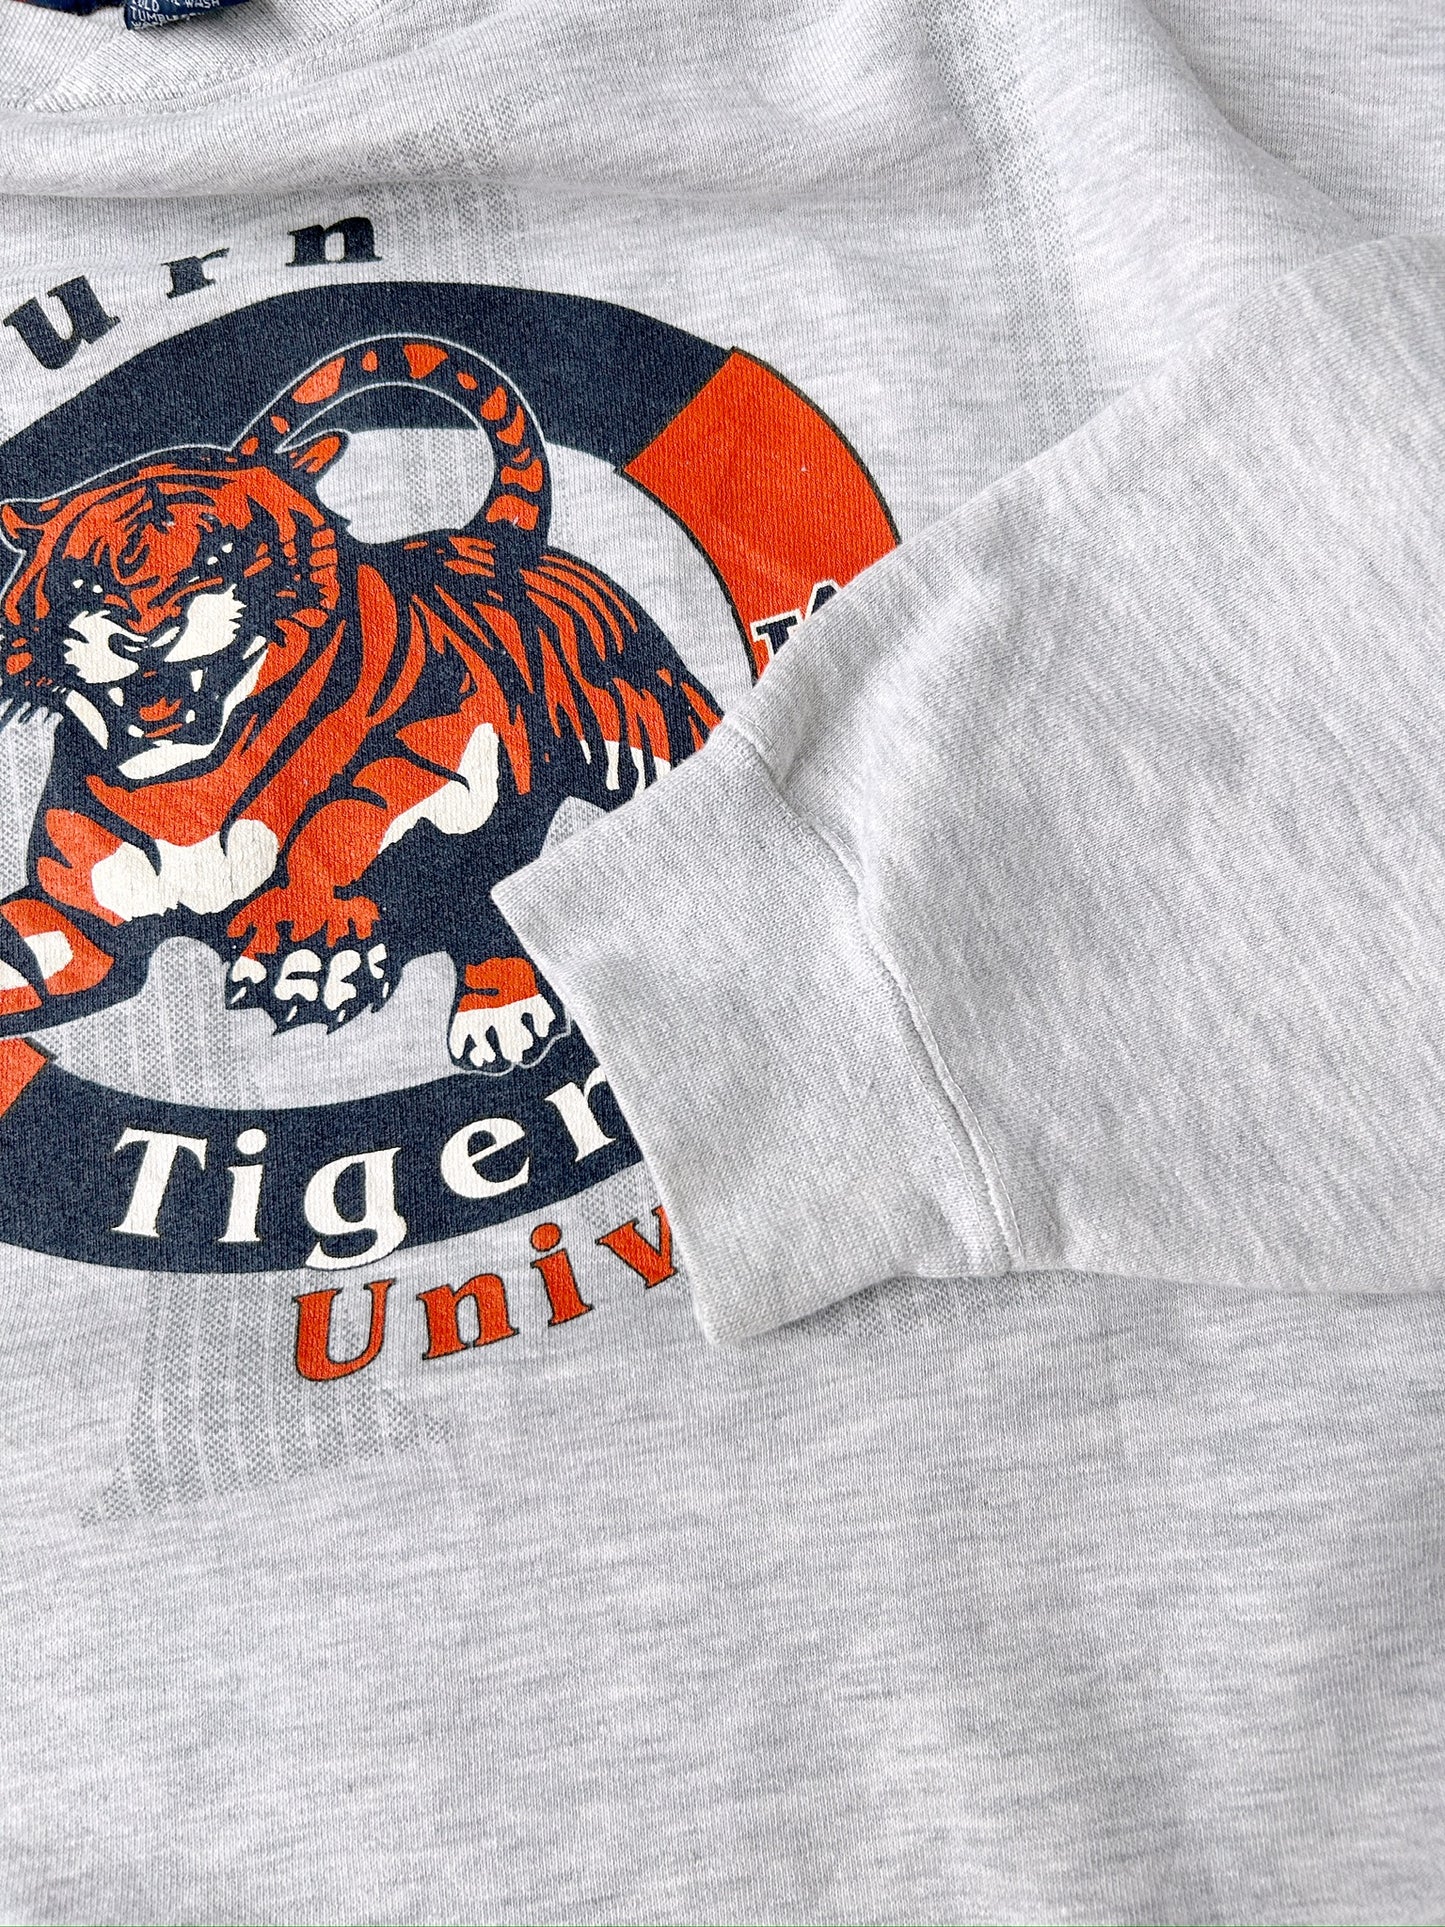 Auburn University Sweatshirt 90's - Large